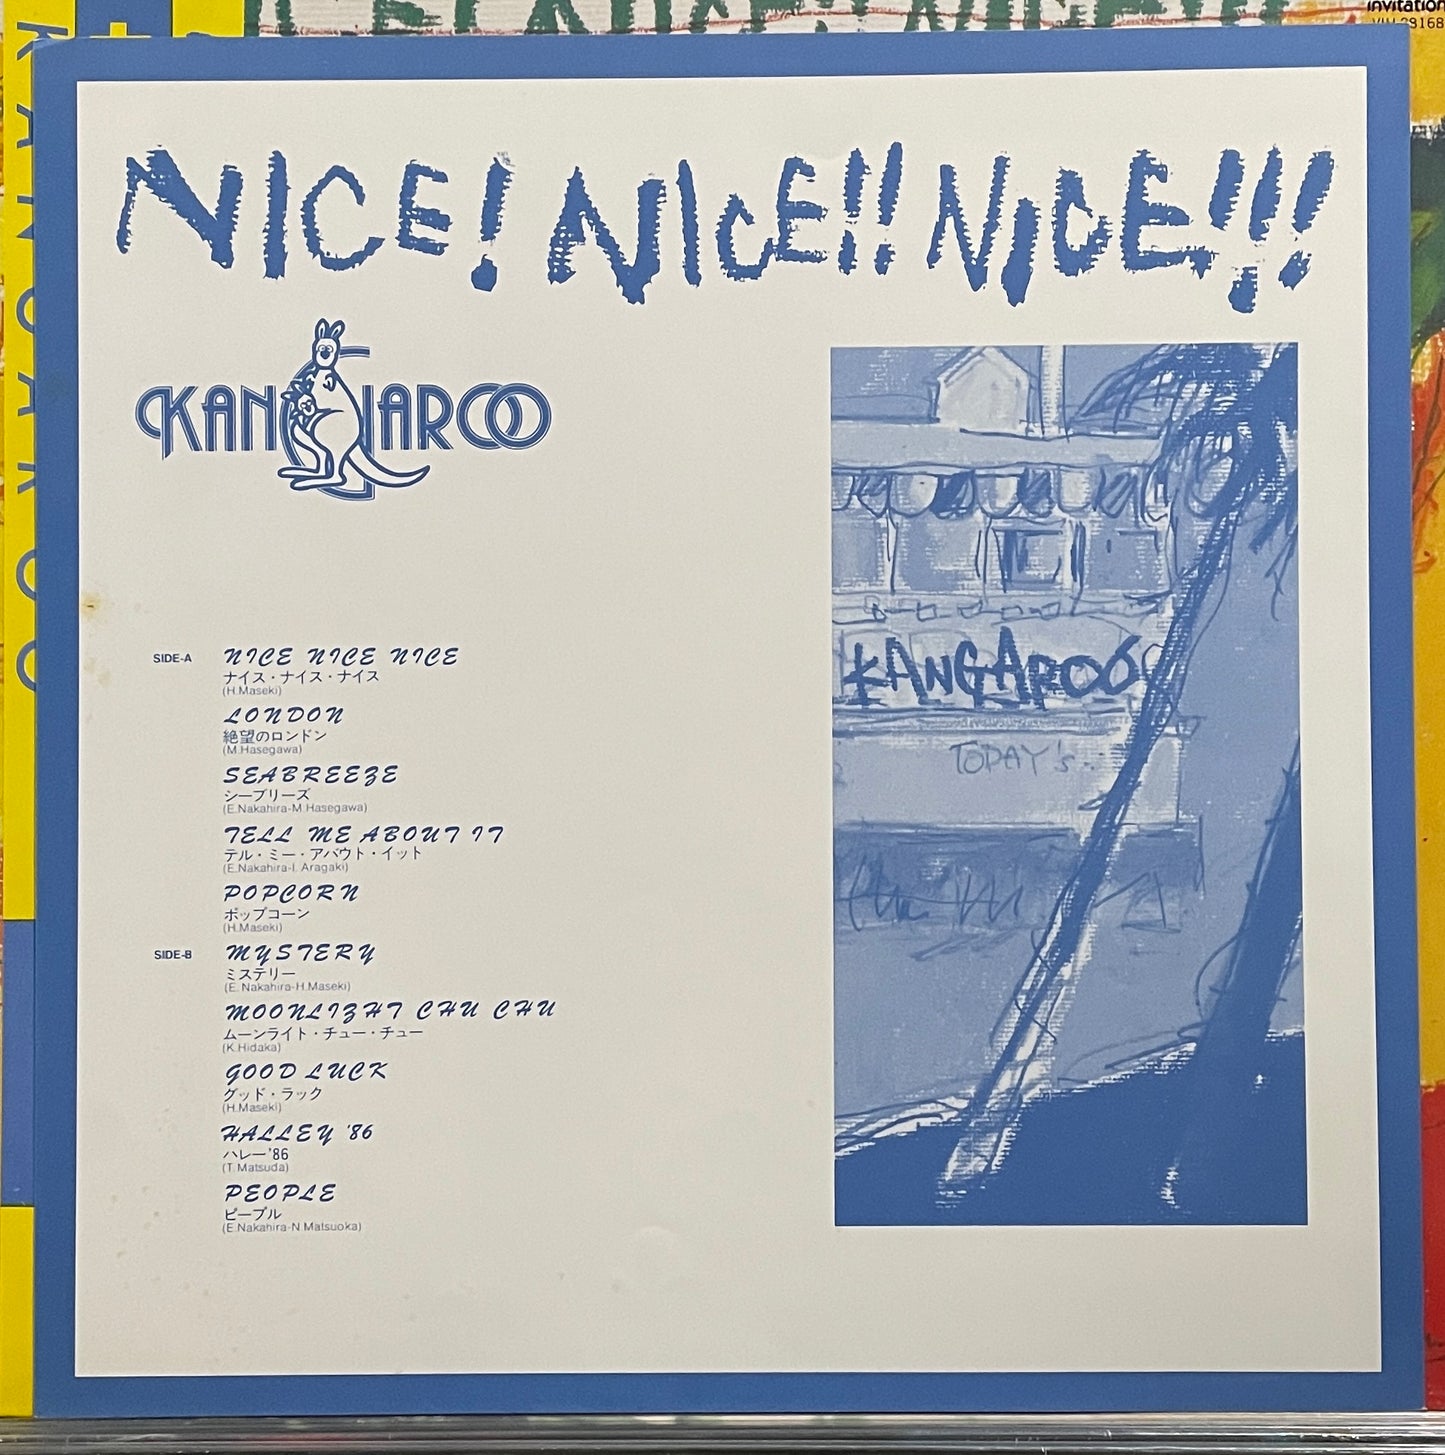 Kangaroo "Nice, Nice, Nice" (1984)